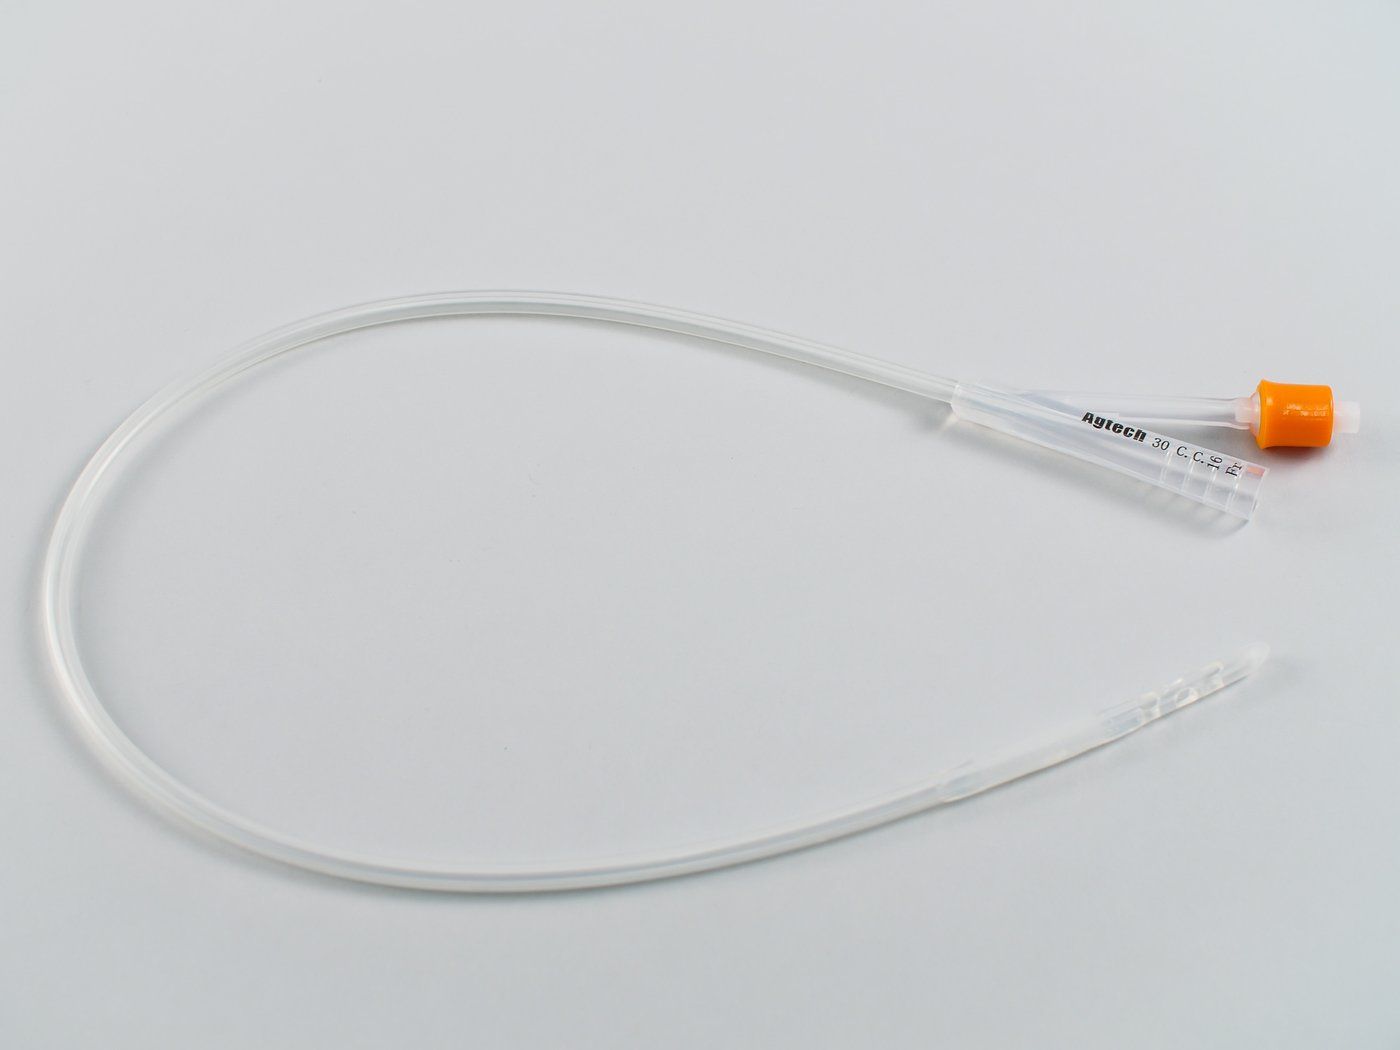 agtech vortech silicone catheter 16fr with 5cc balloon 23 bovine